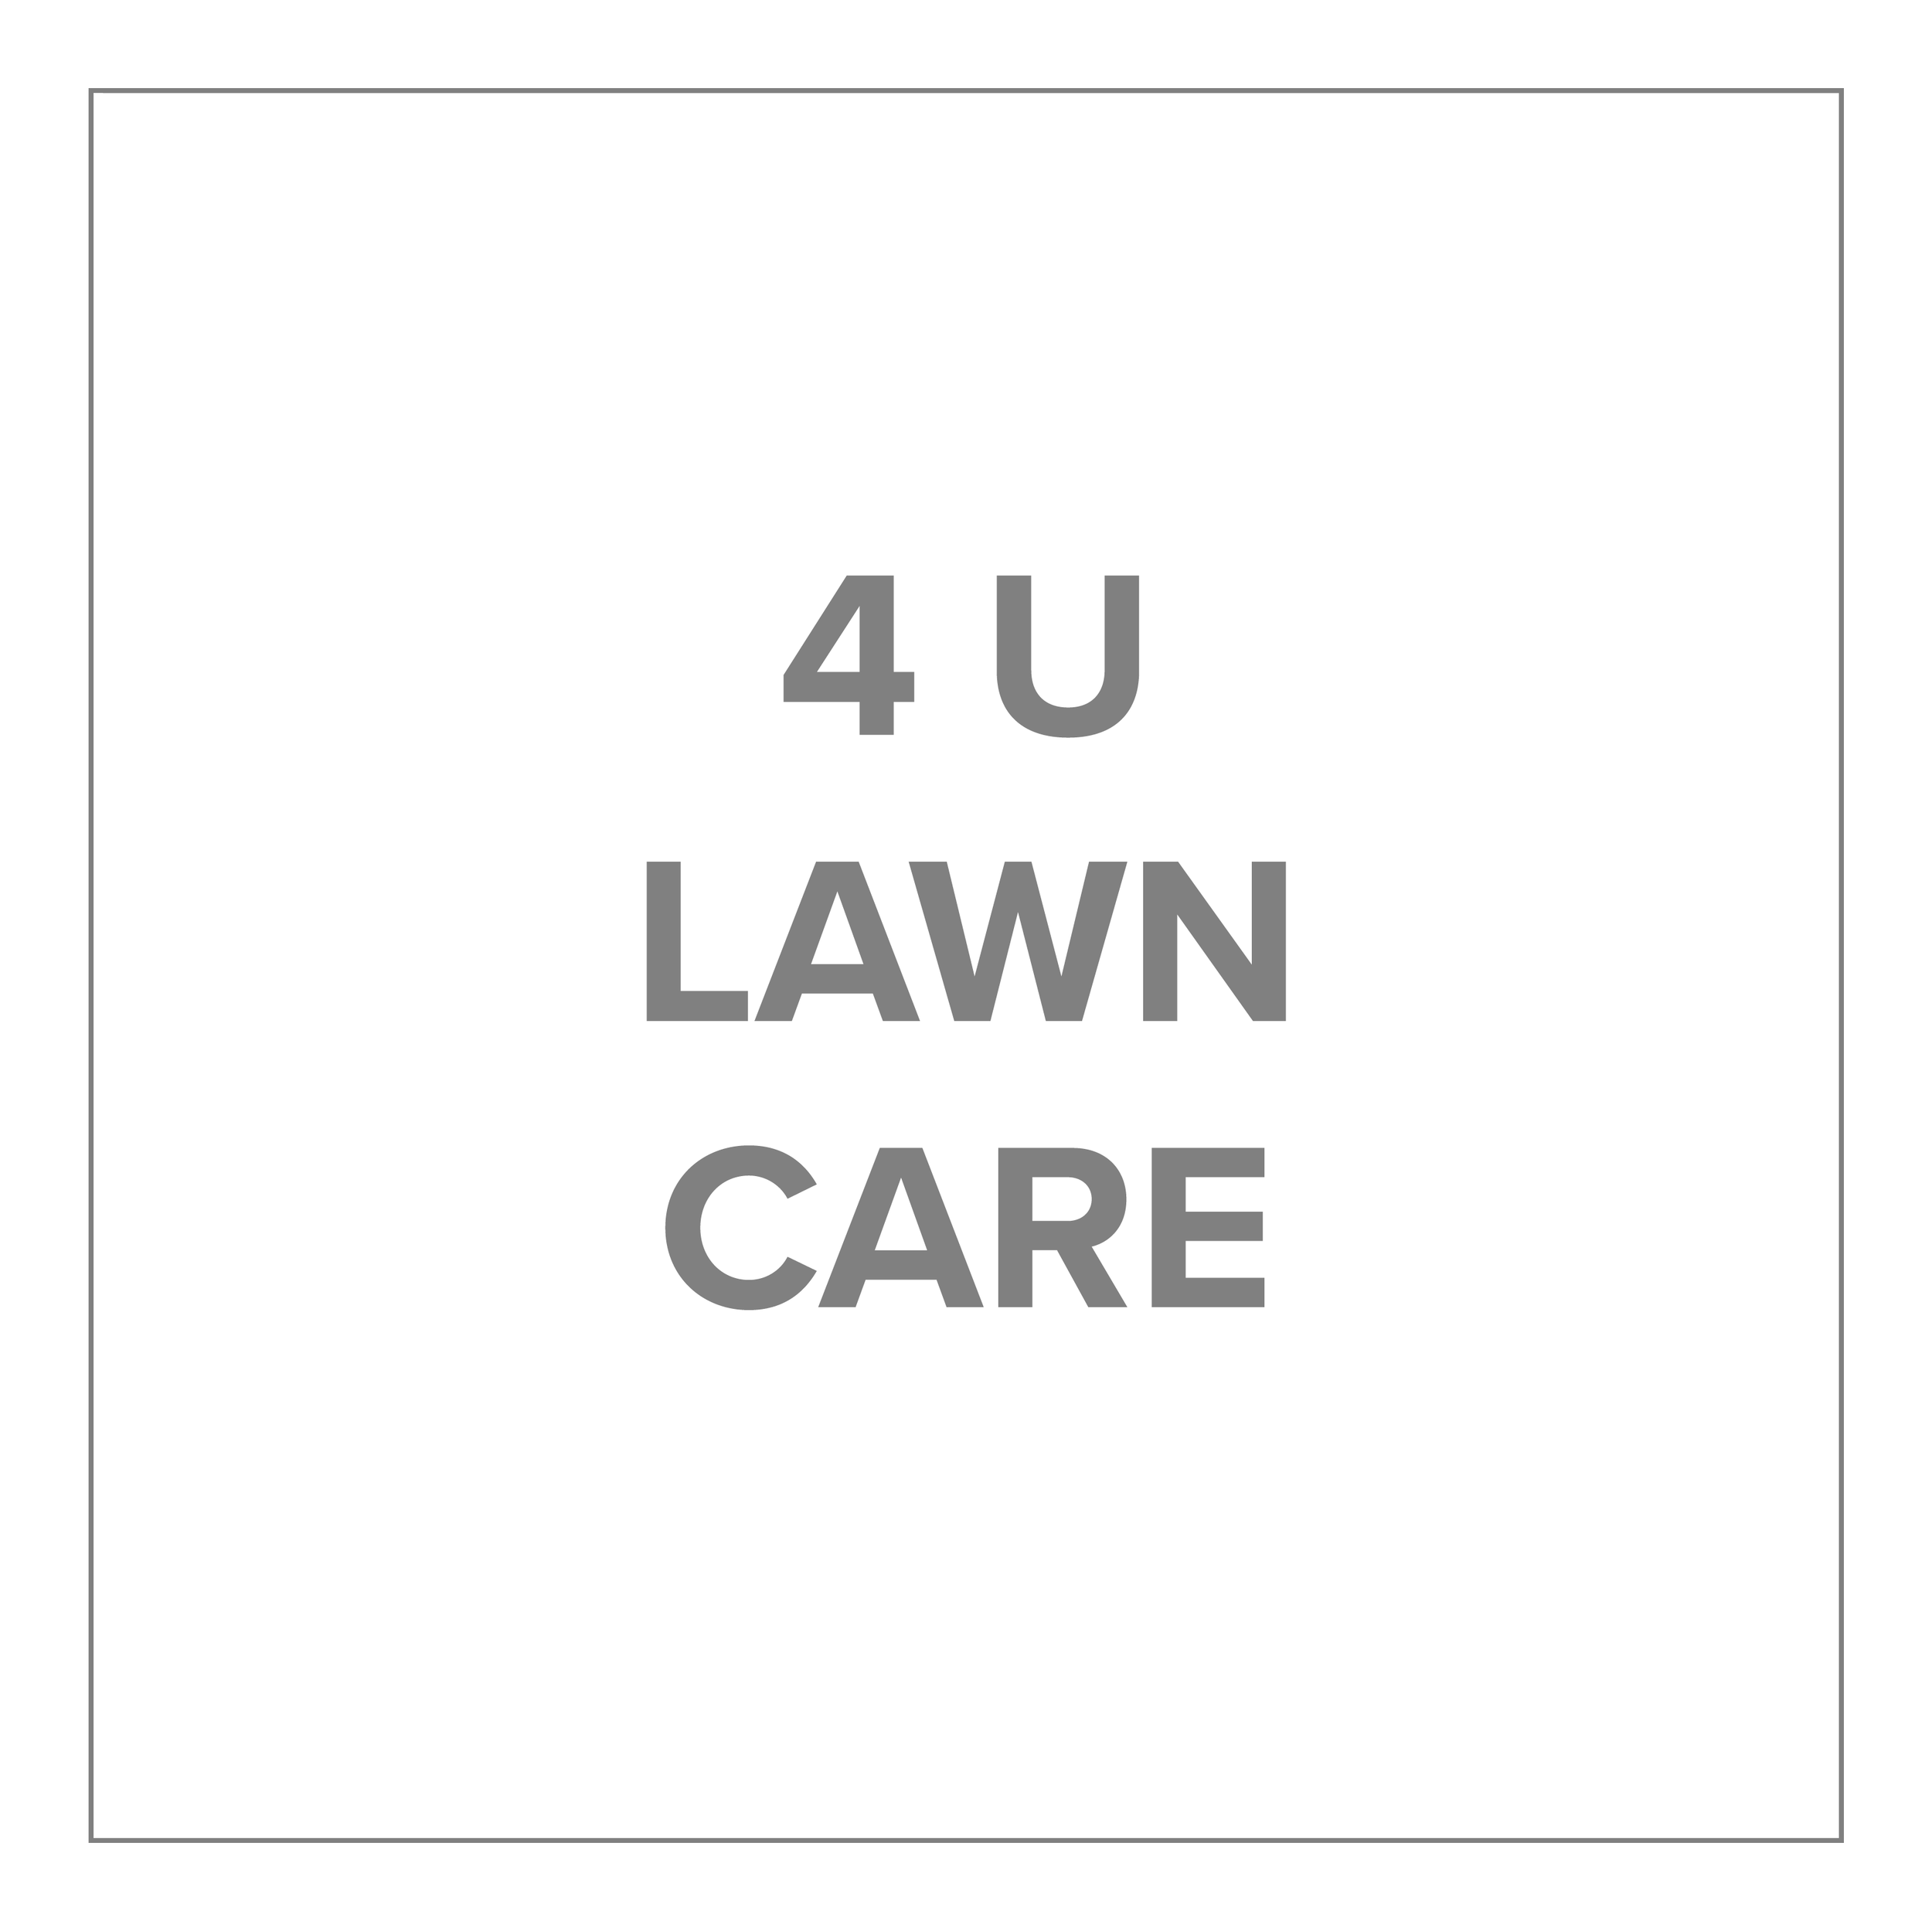 4 U Lawn Care